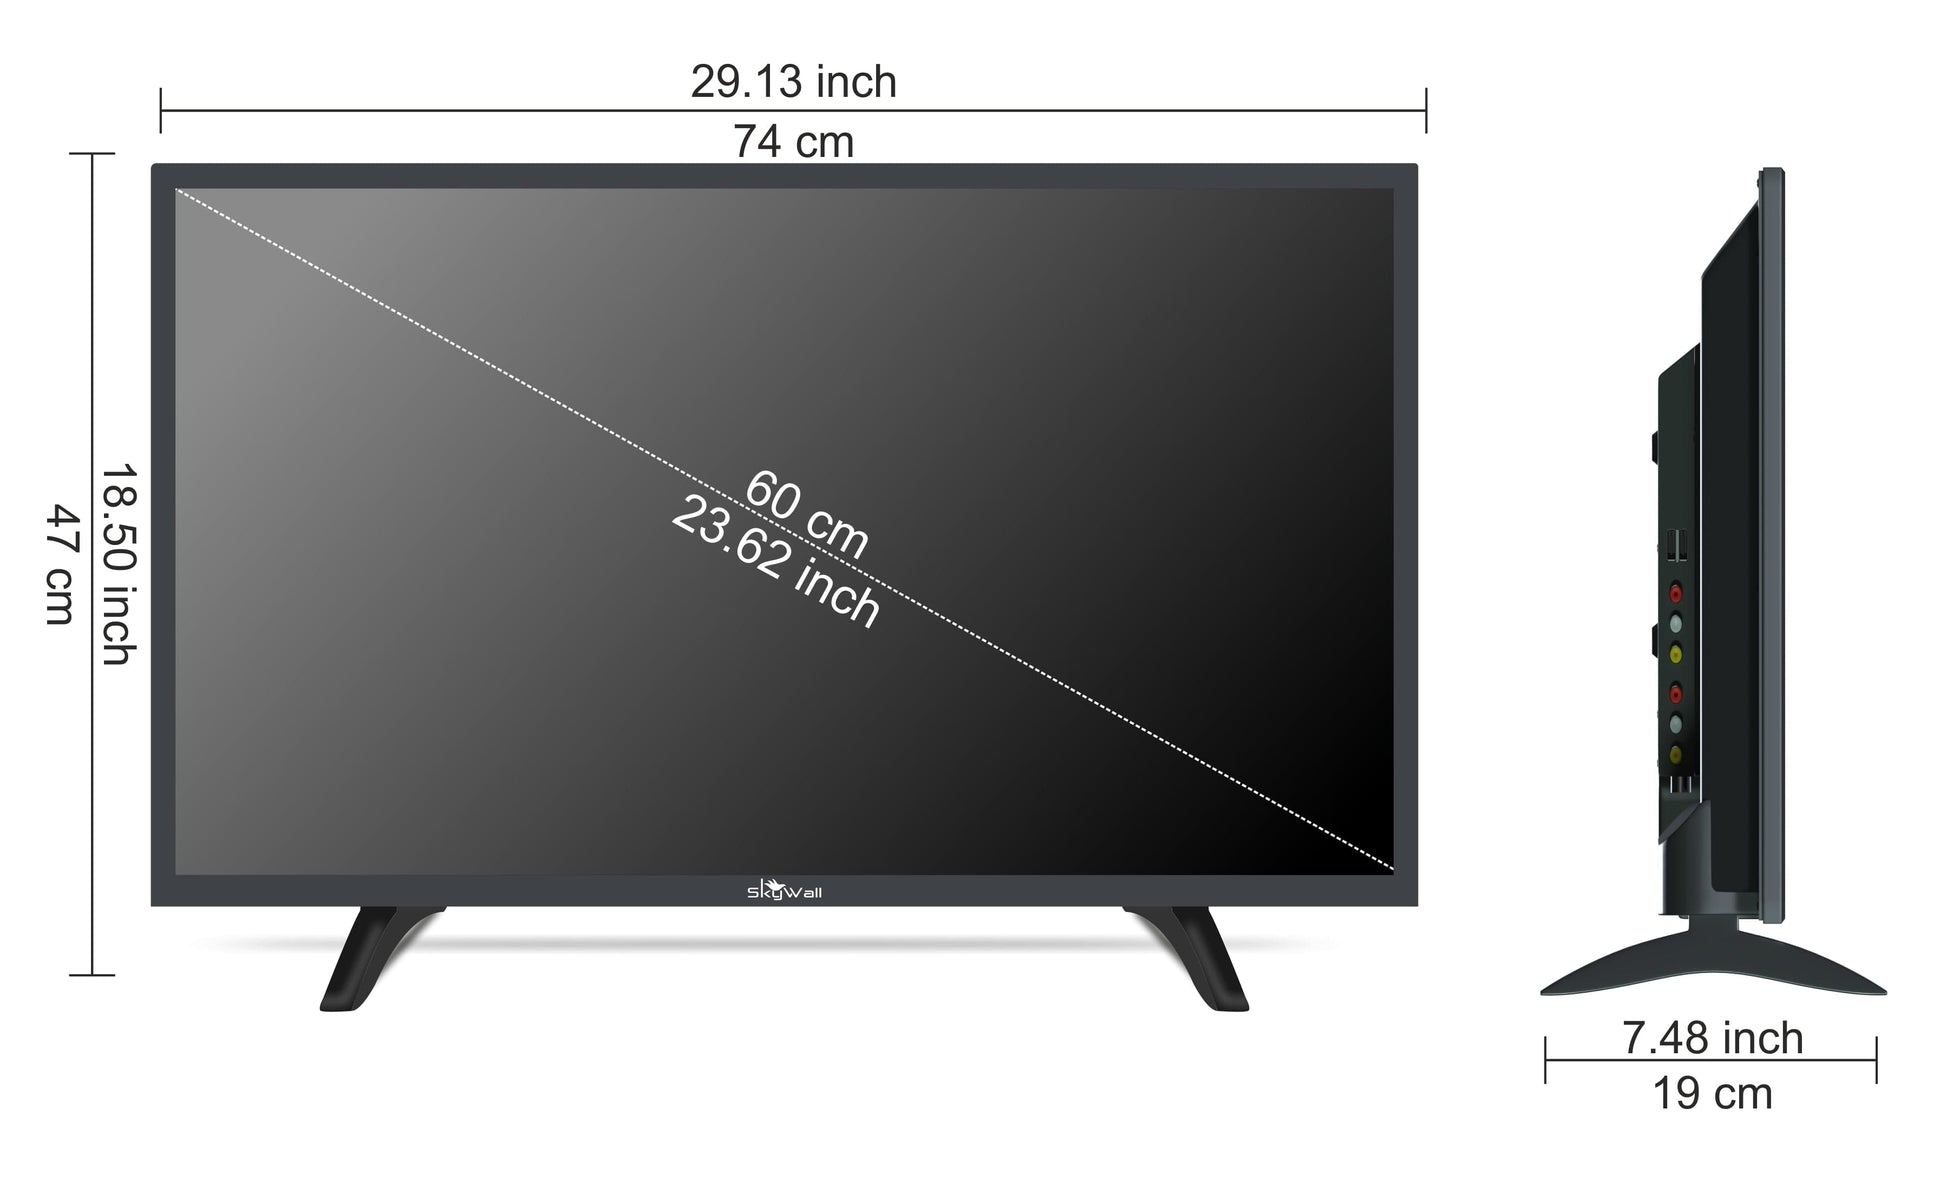 MoonAir 60 cm (24 inches) Full HD LED TV, Ultra Slim, A+ Grade Panel, ULTRASLIM 24N (Black) (2023 Model)